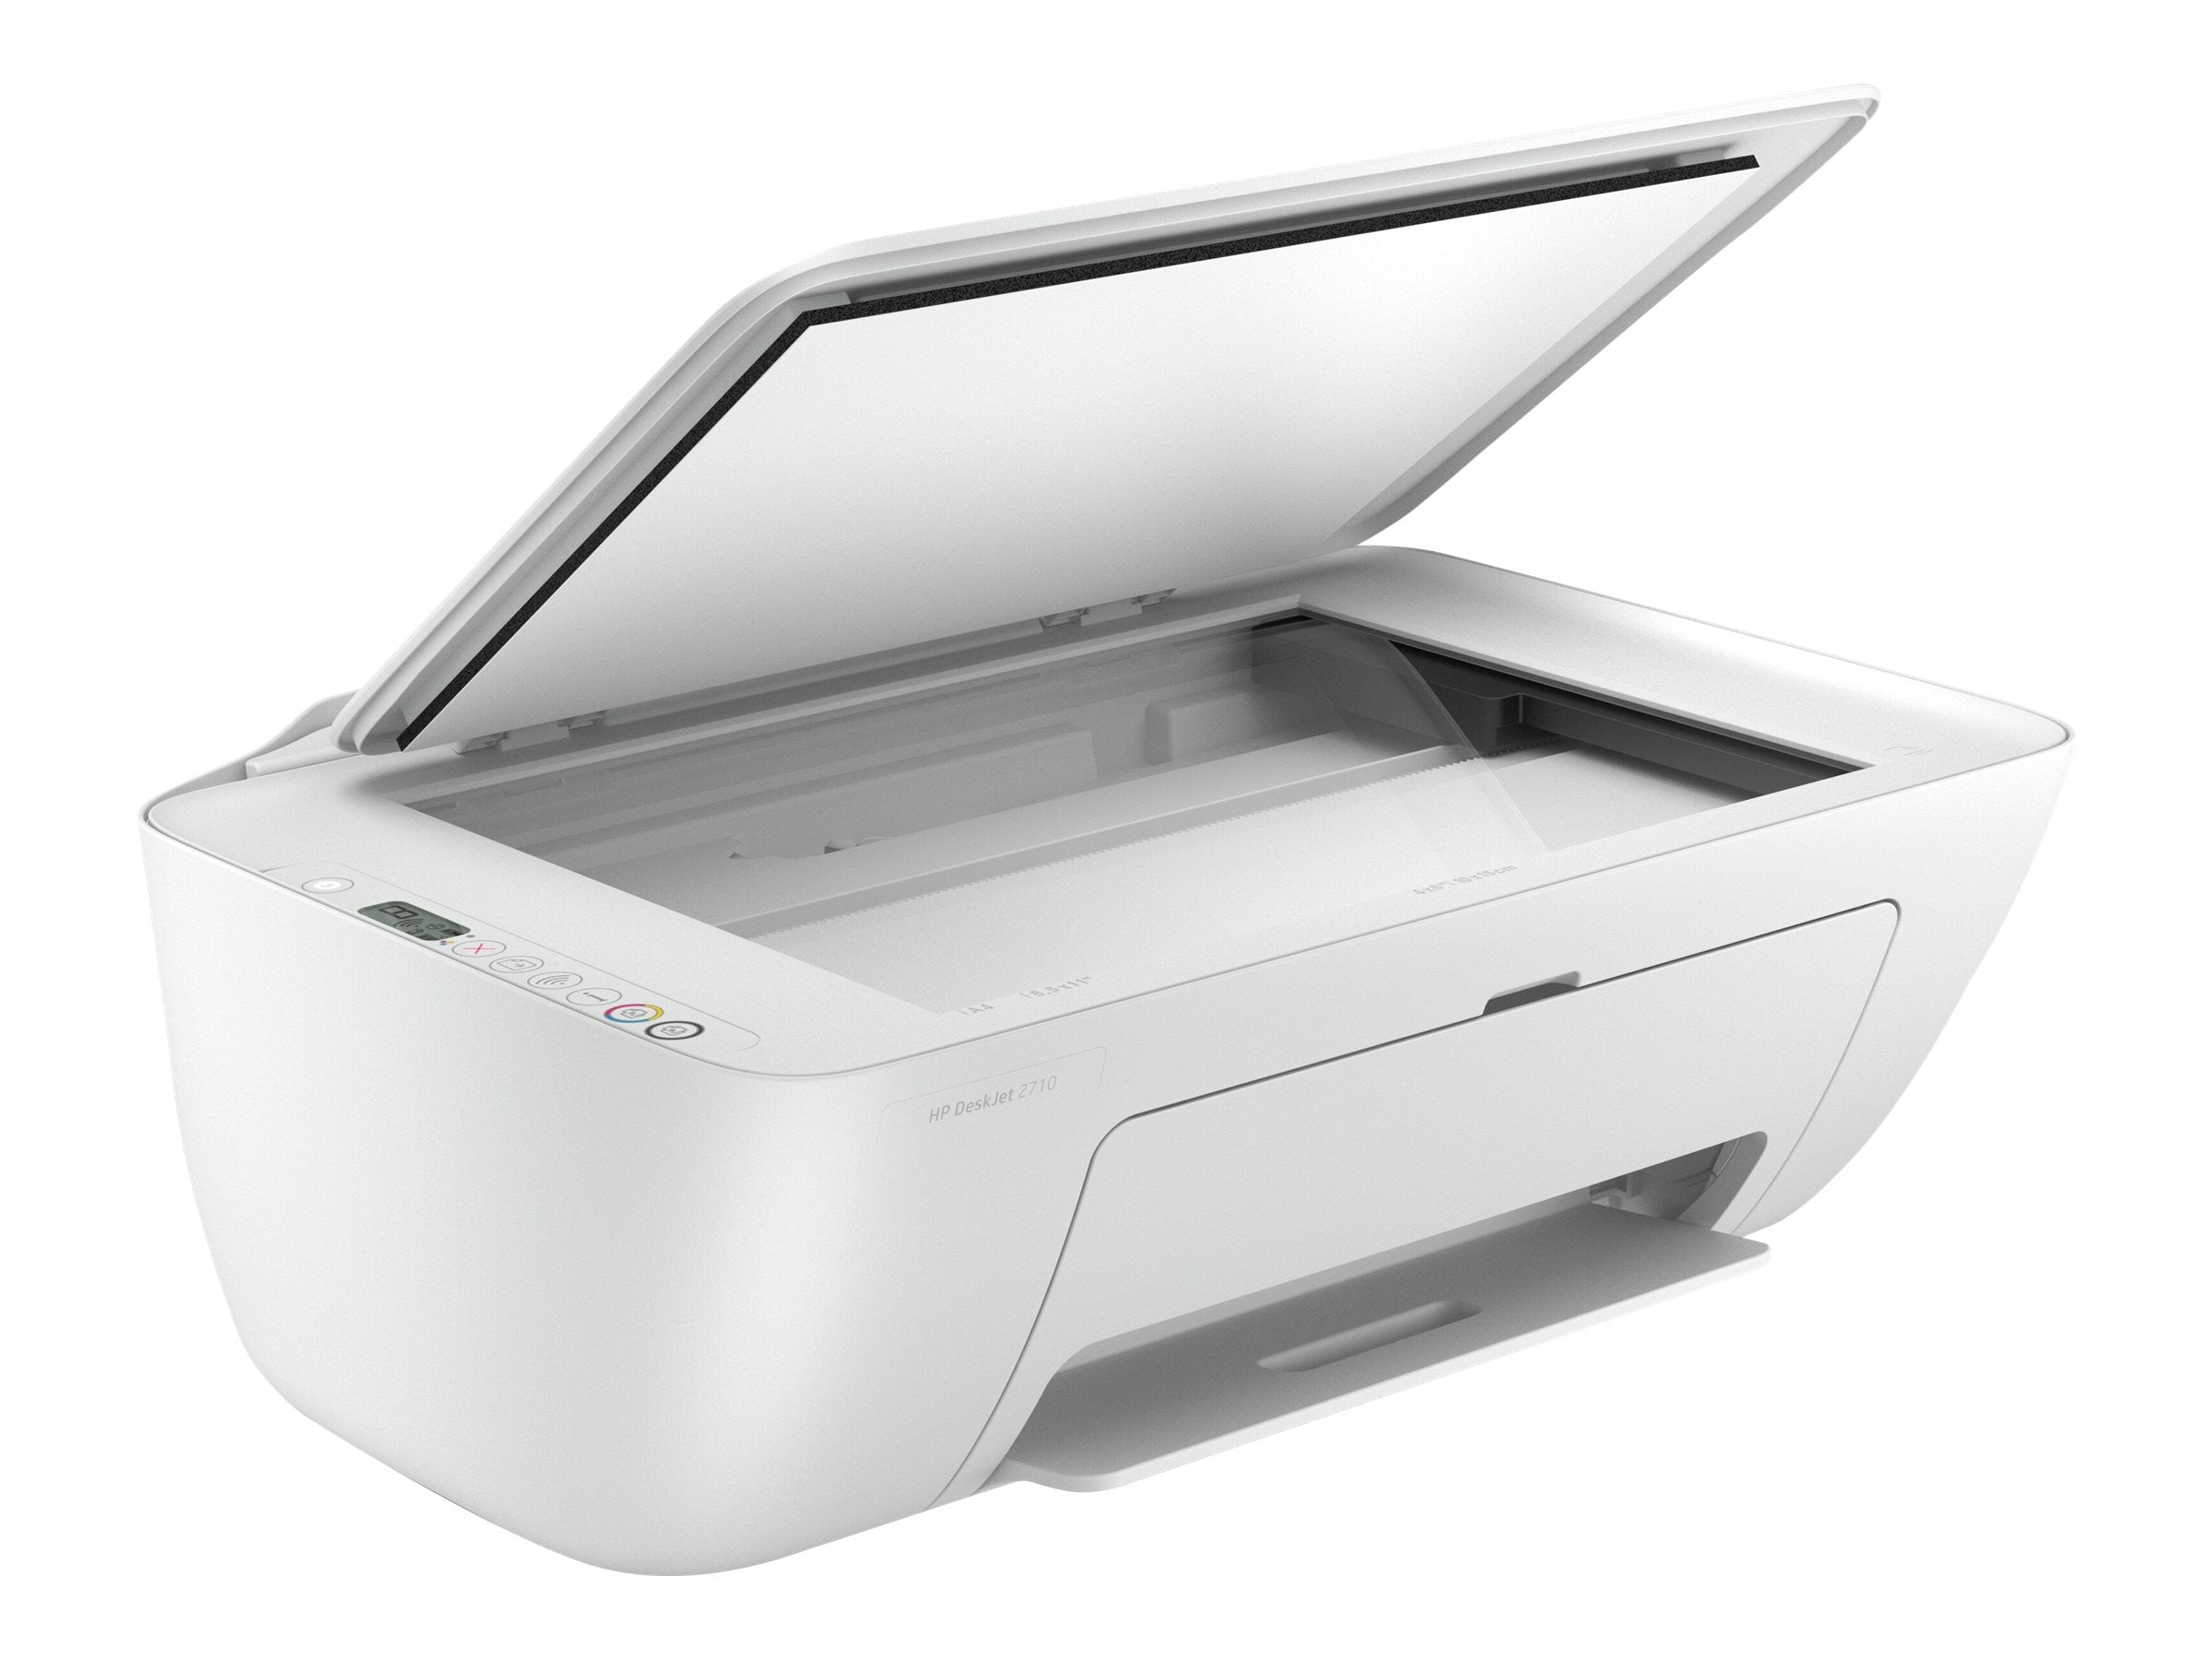 Printer HP Deskjet 2710 AIO - Lootbox.dk